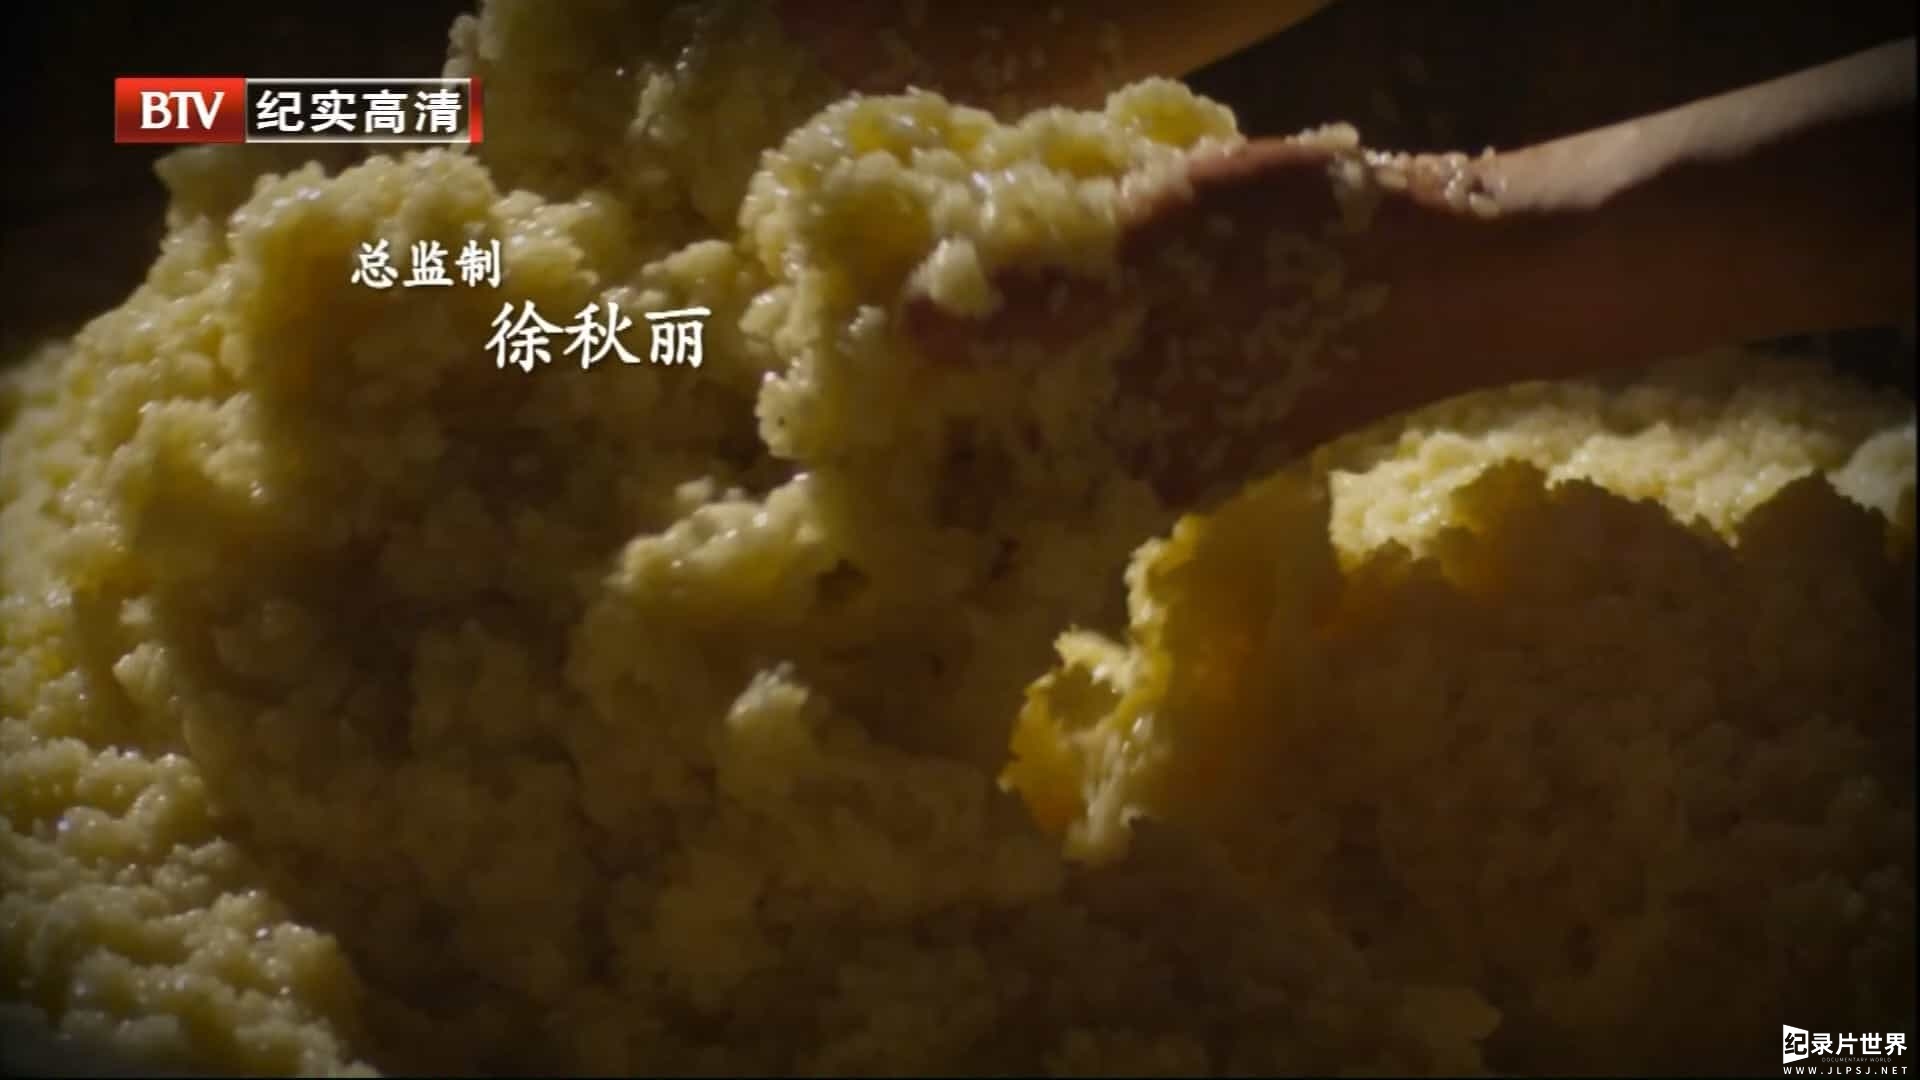 BTV大型人文纪录片/中国美食系列《江南味道 A Bite of Jiangnan》全8集 